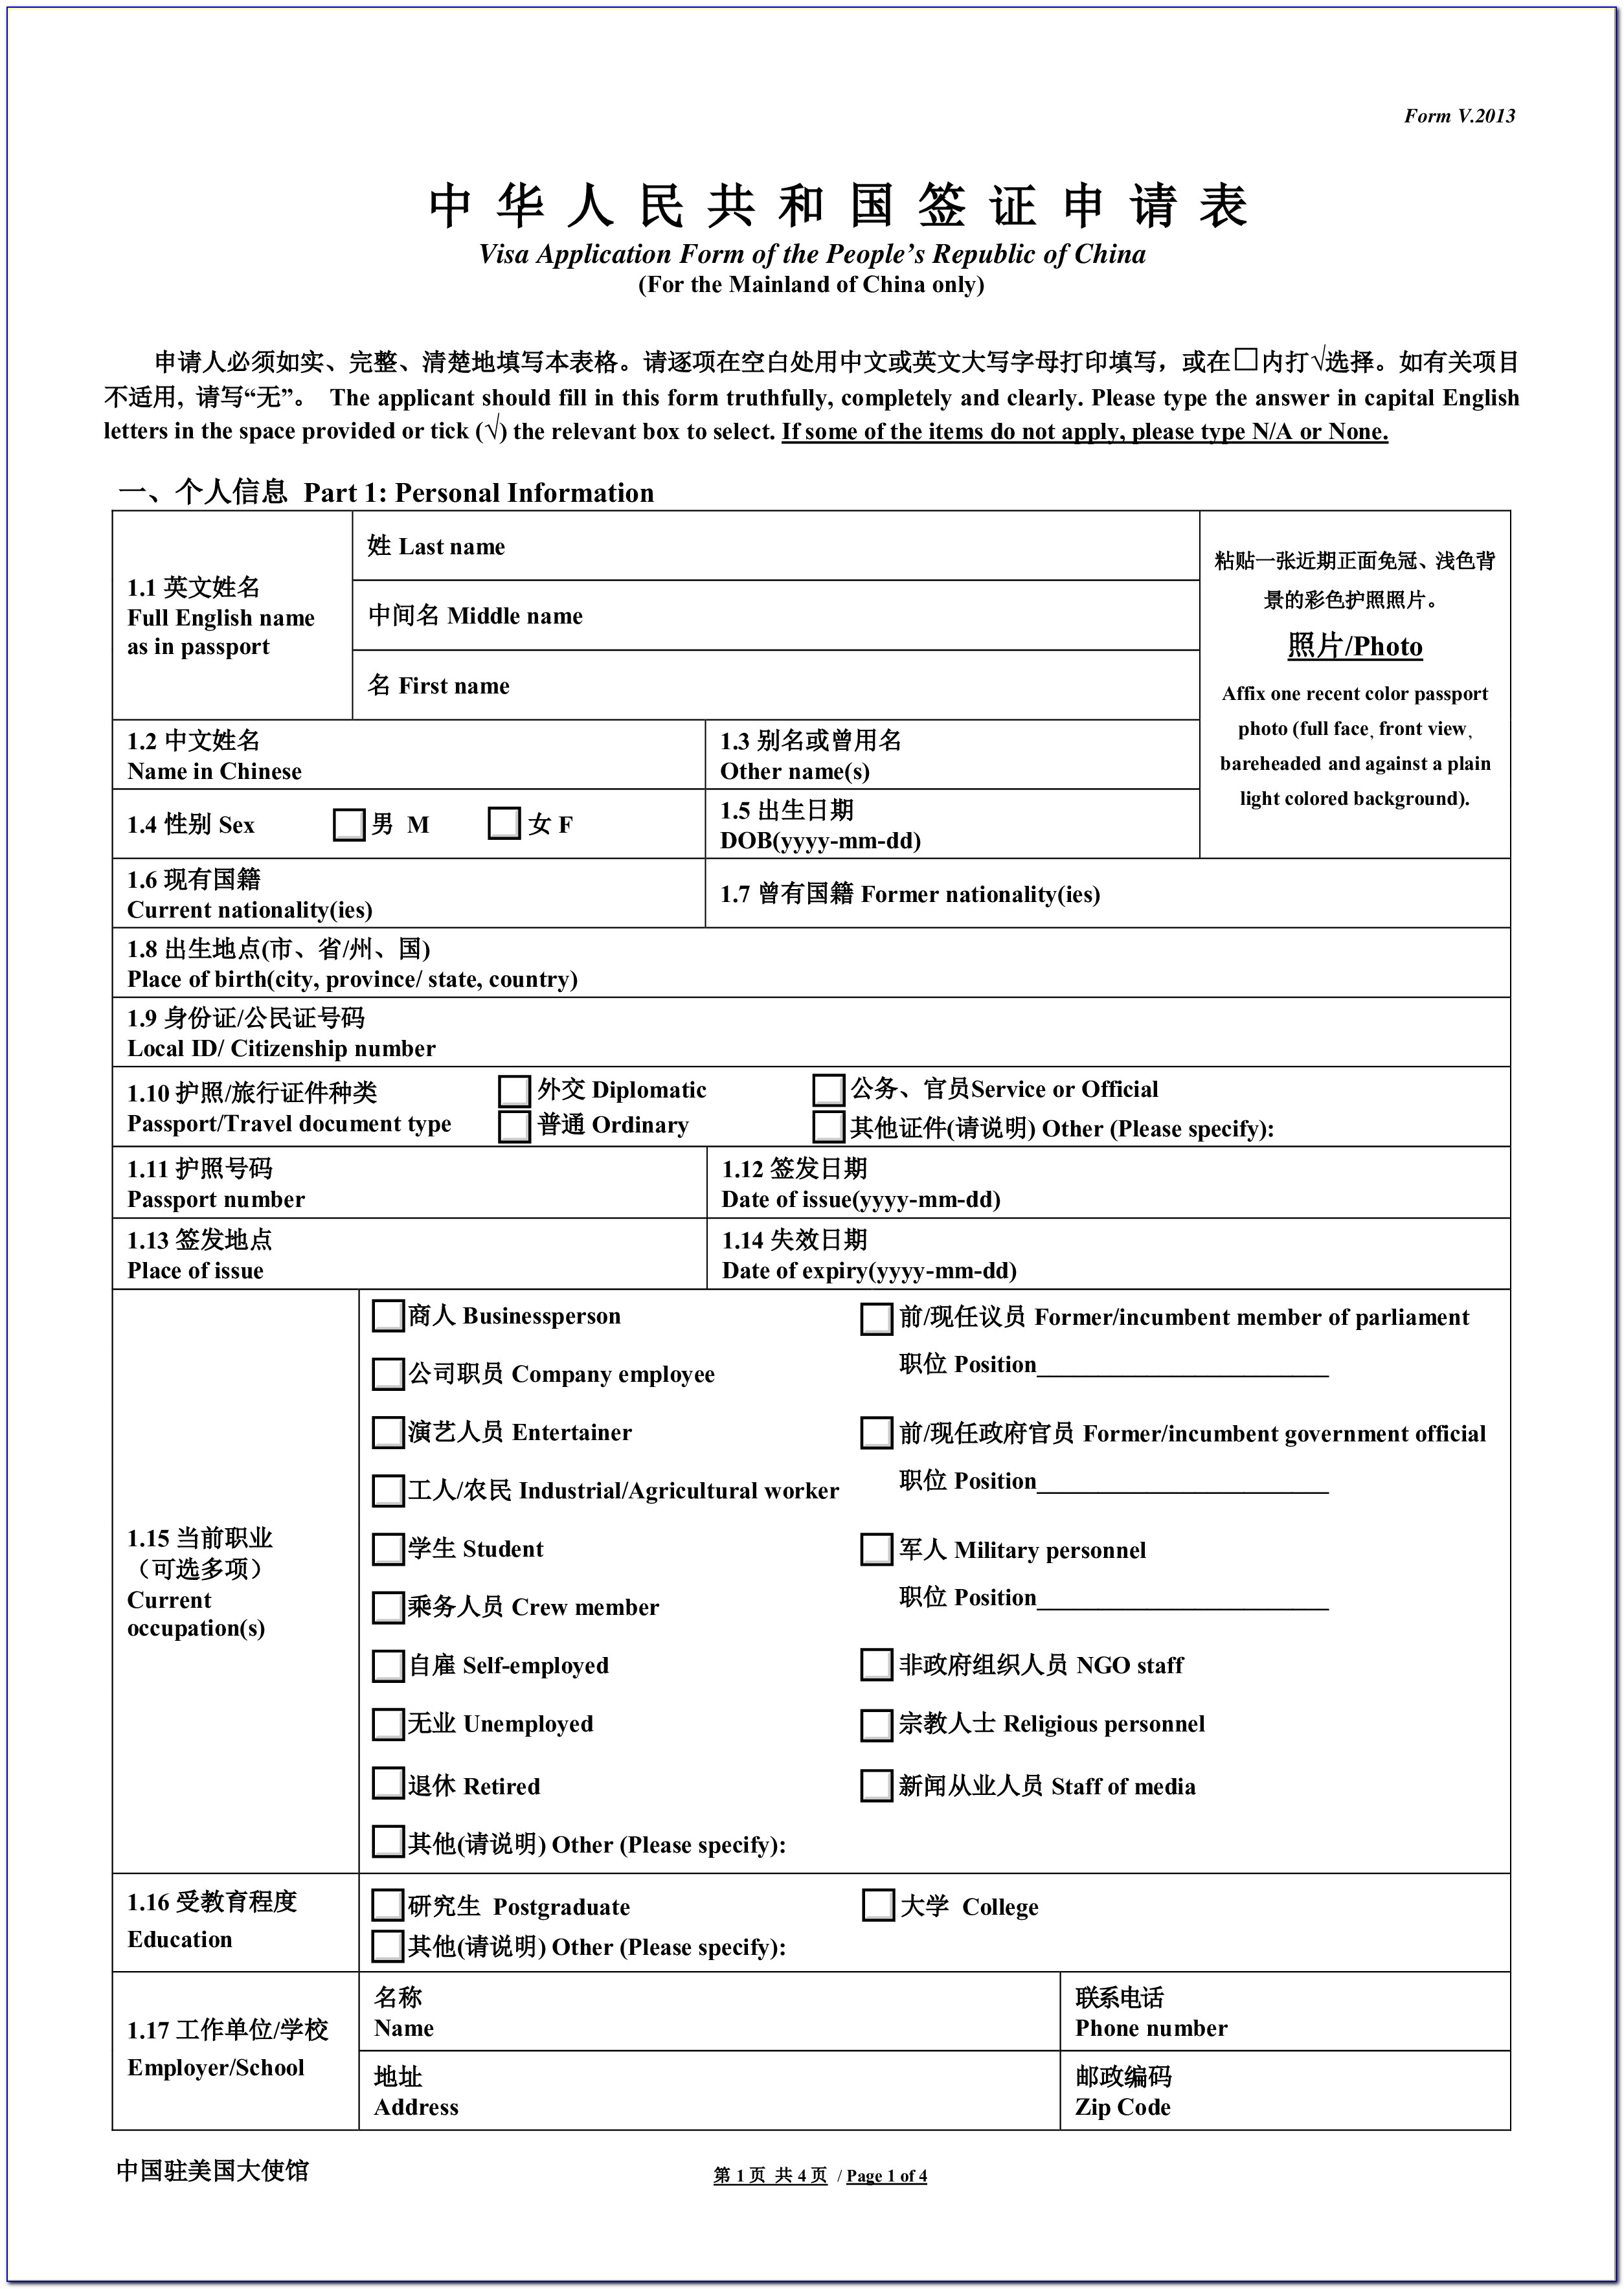 Form V.2013 China Visa